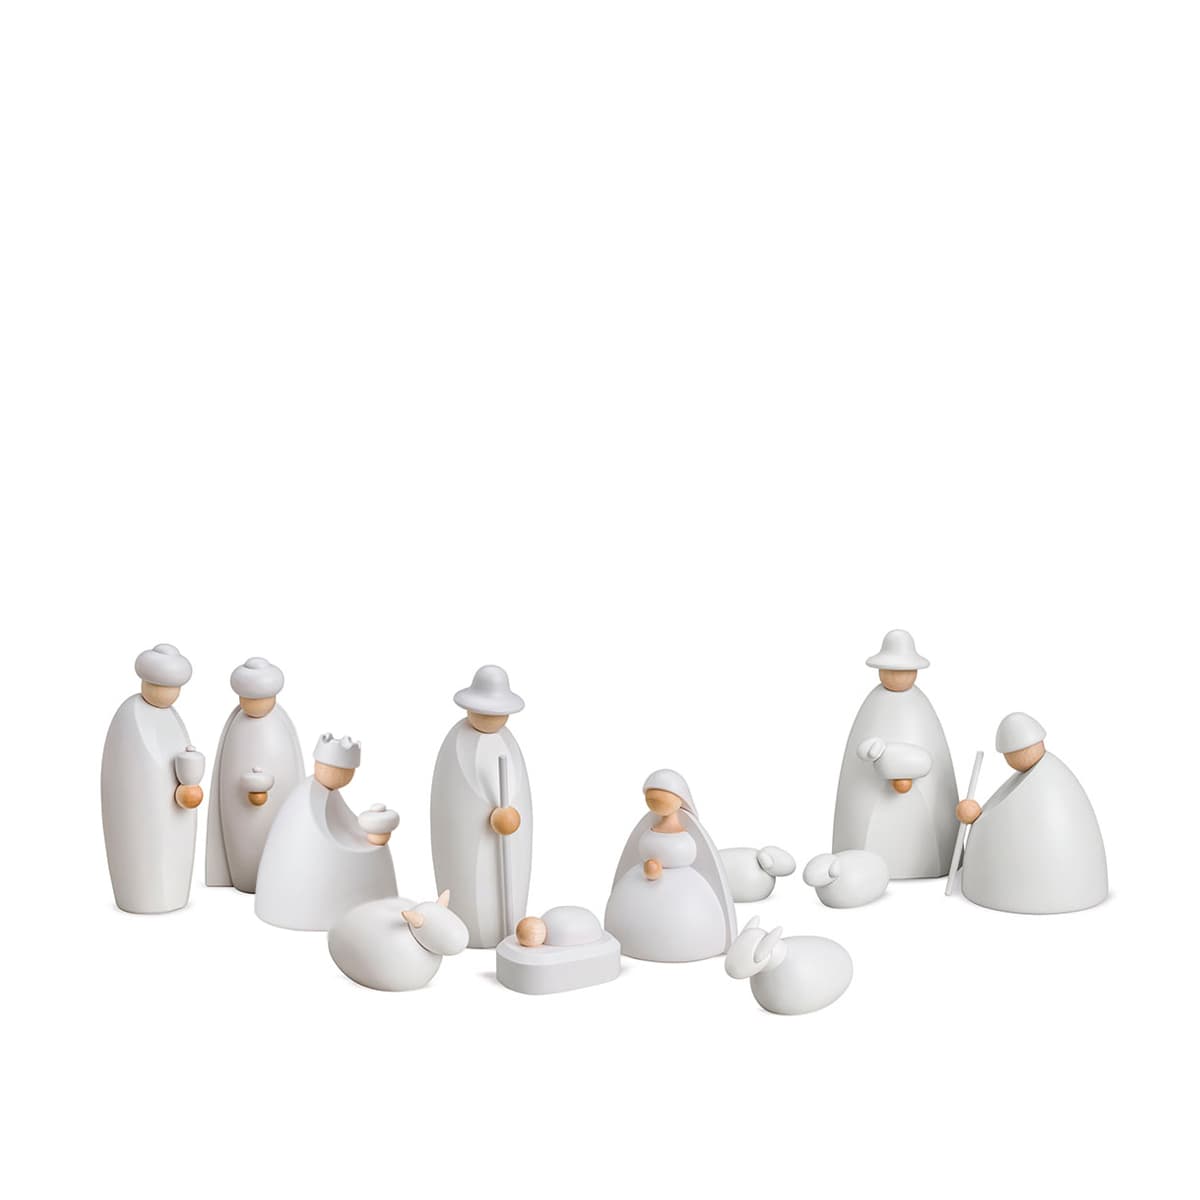 Krippenfiguren 12-teilig weiß